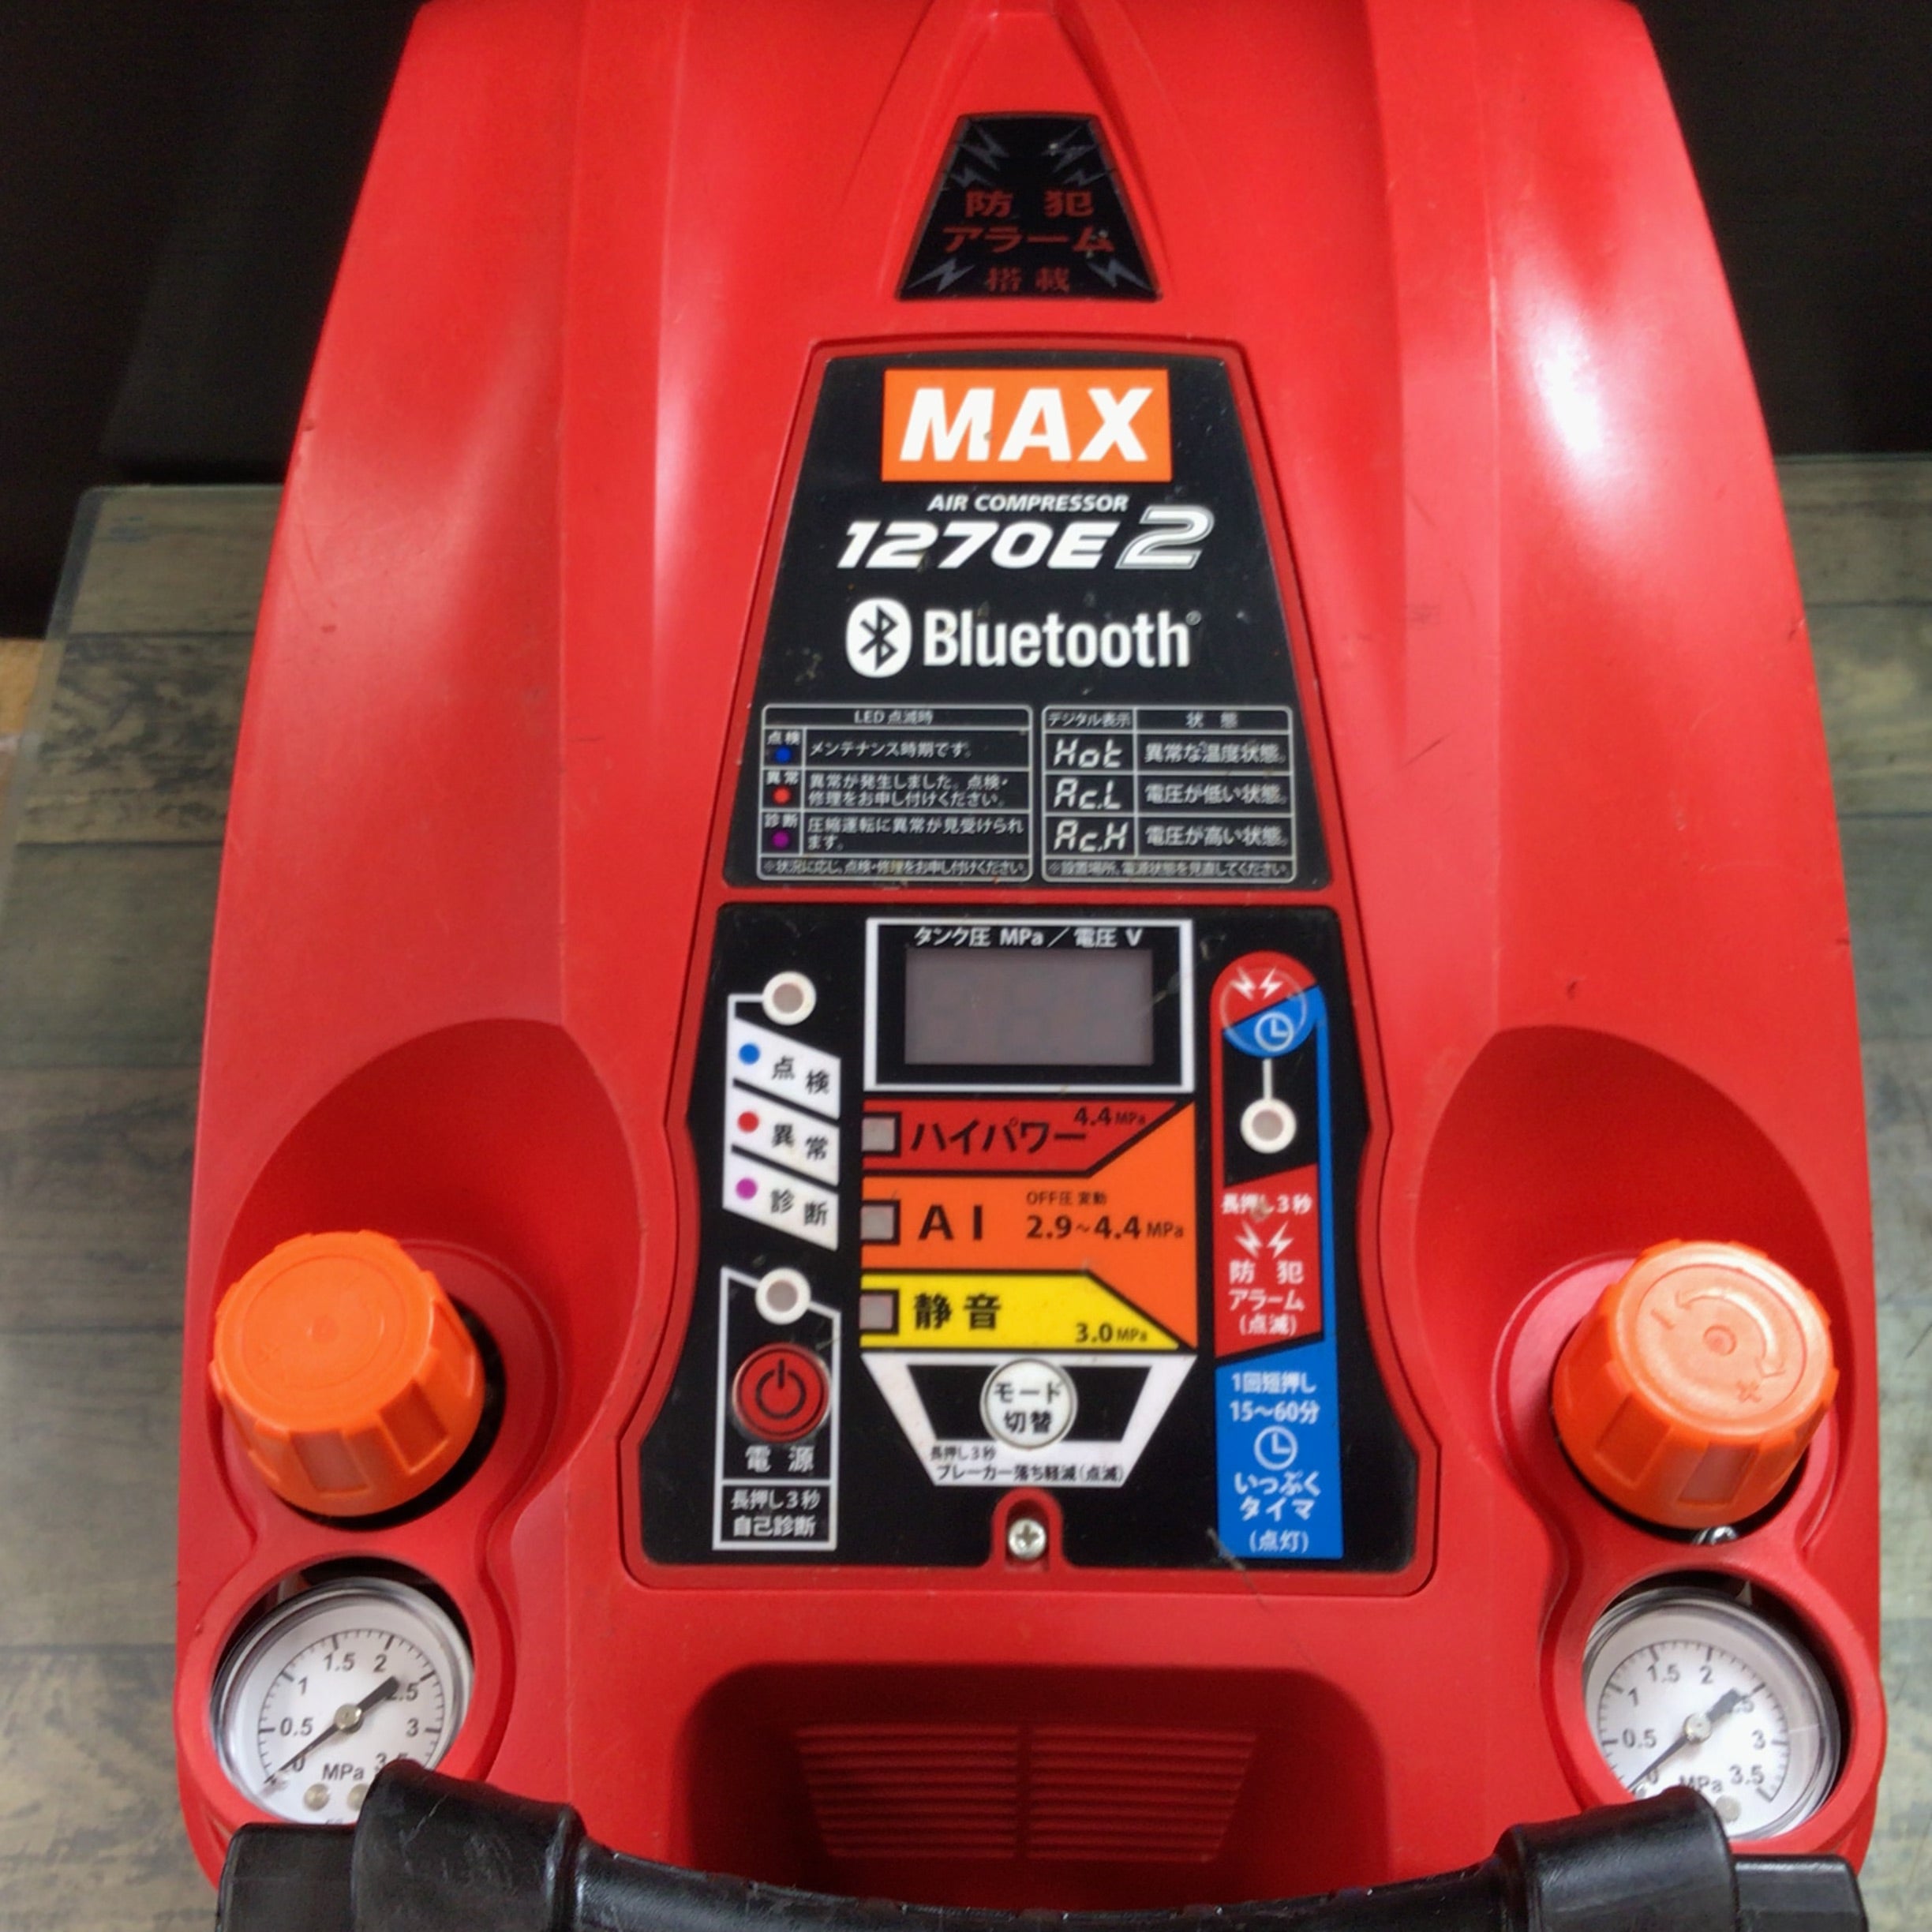 max ak-hh1270e2 エアー コンプレッサー 高圧4口-